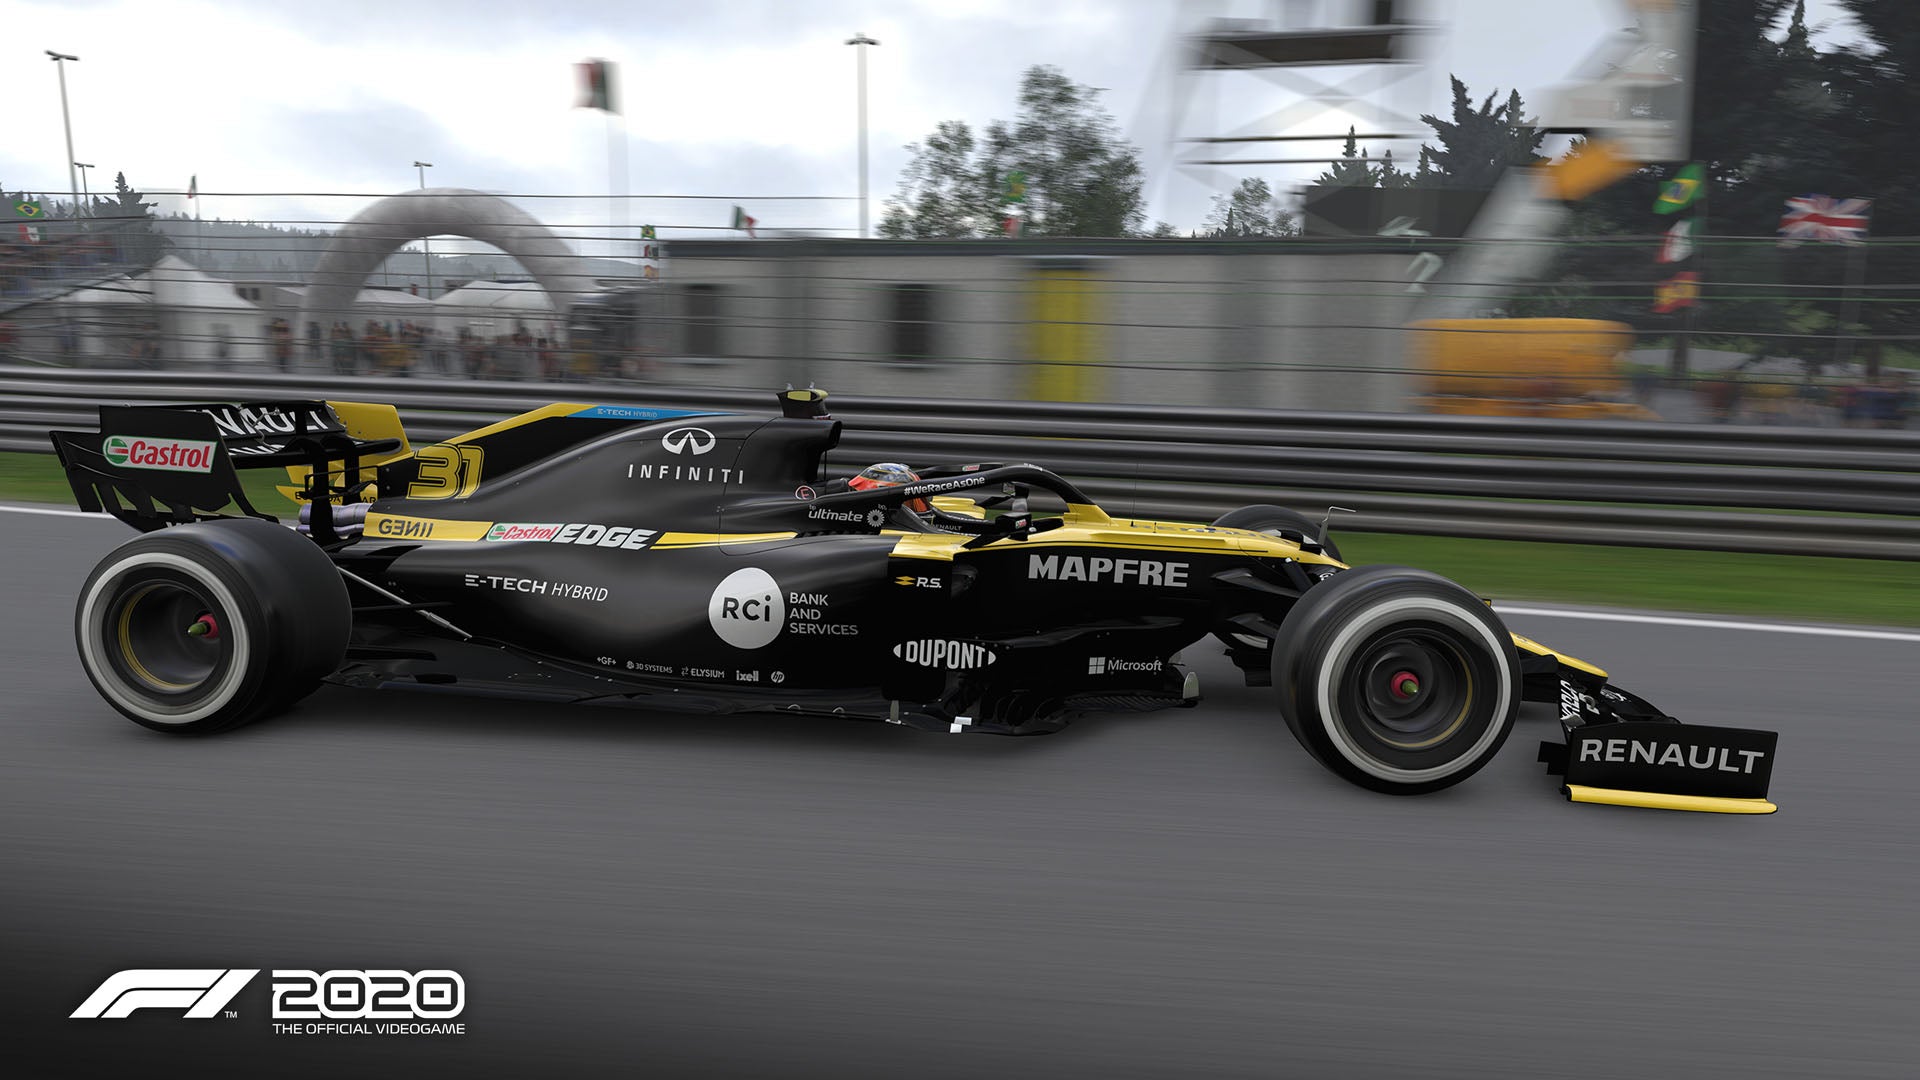 F1 2020 The Official Game Website F1 2020 Spa Sports Update Sneak Peek